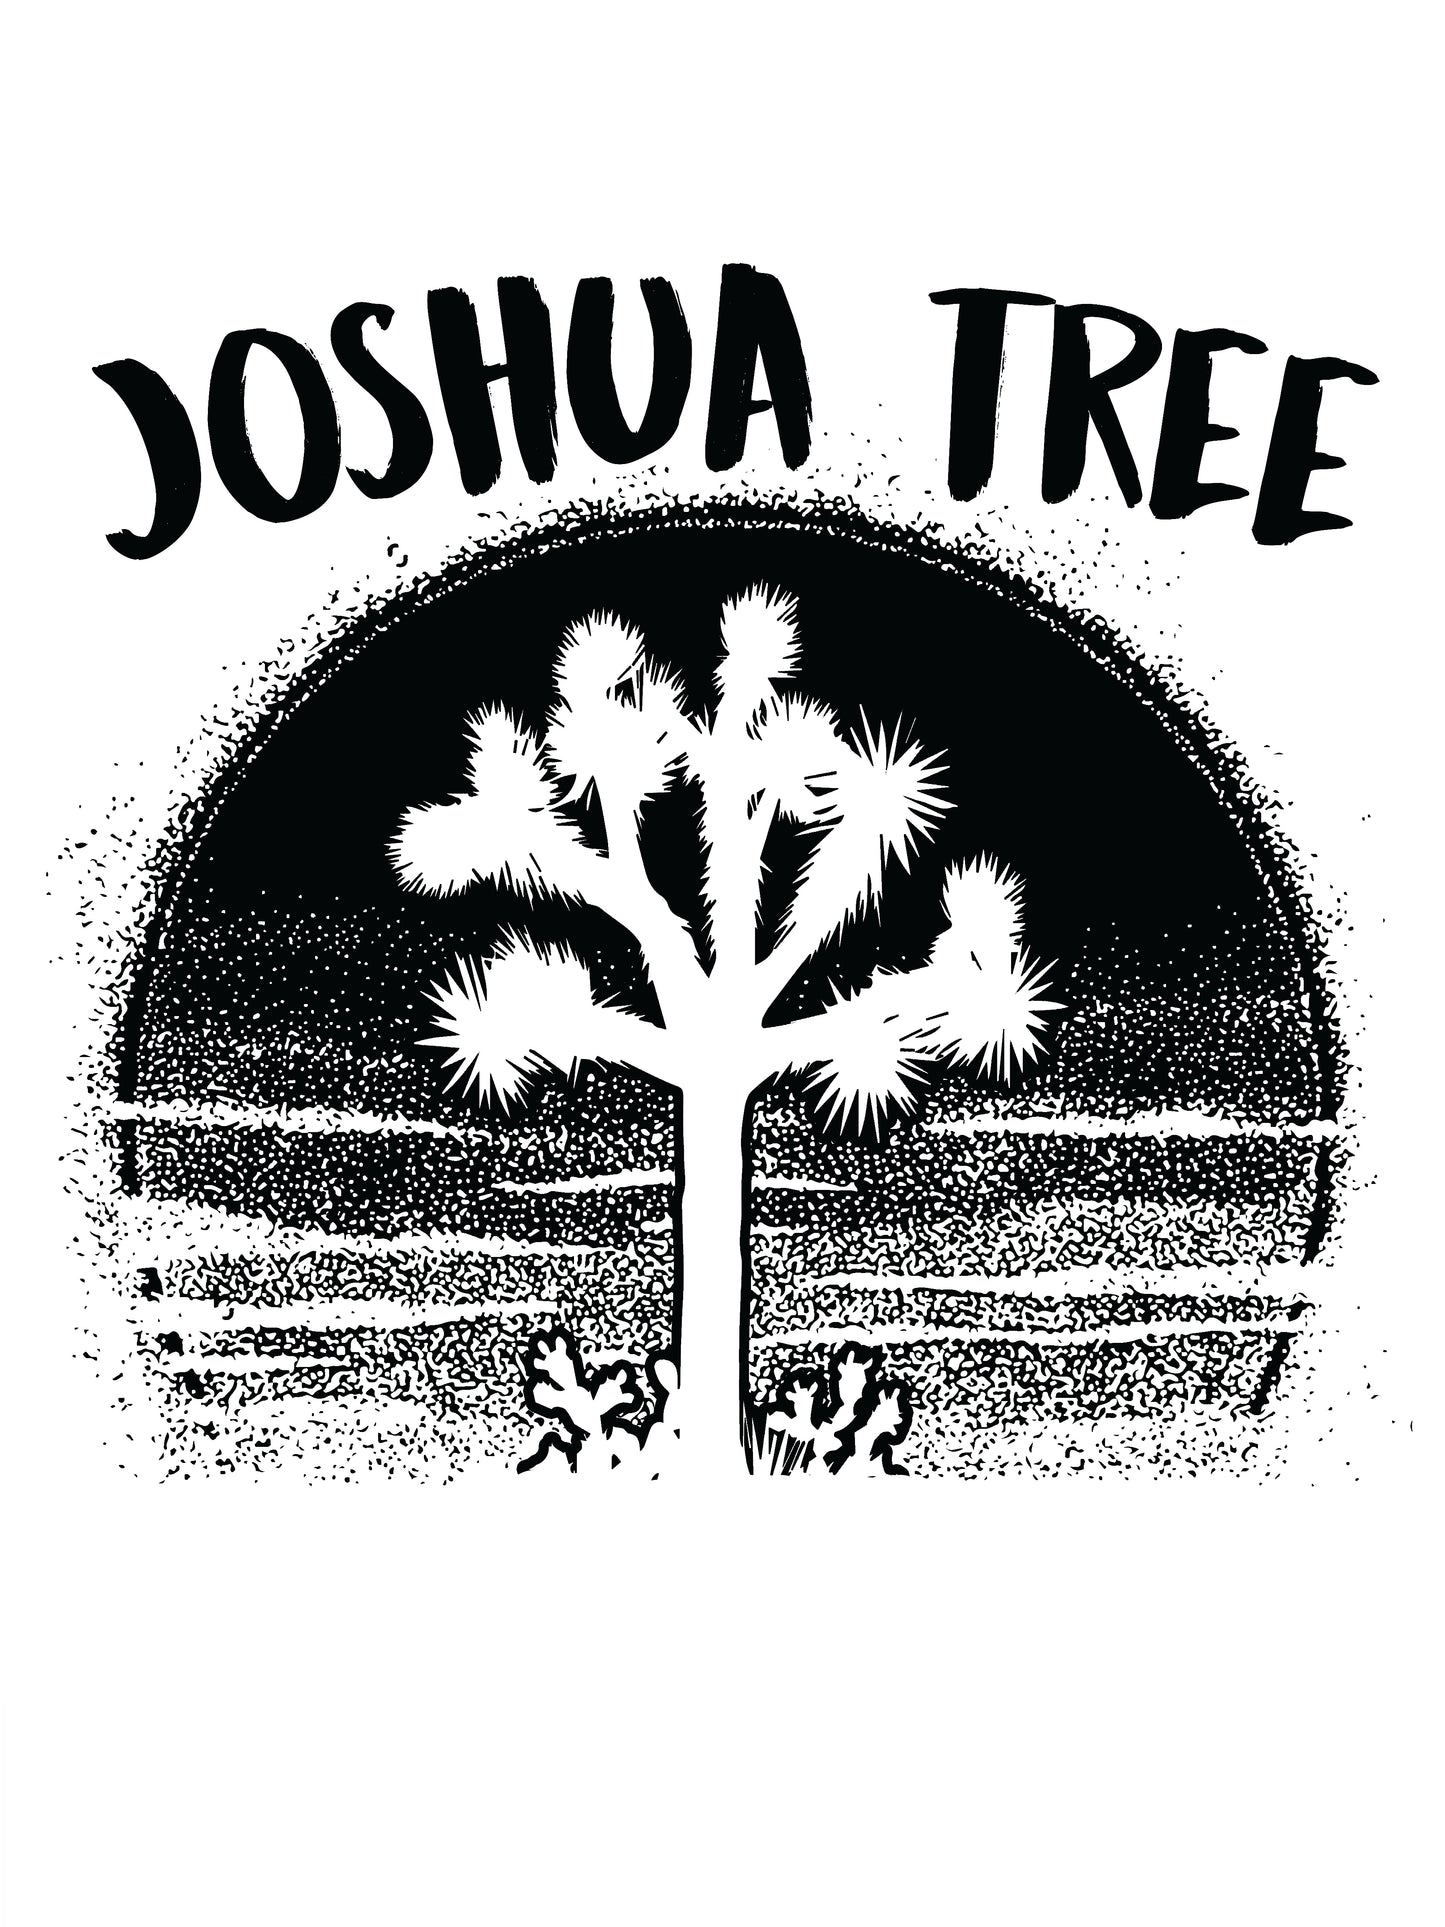 Joshua Tree 13 x 19 Poster Print